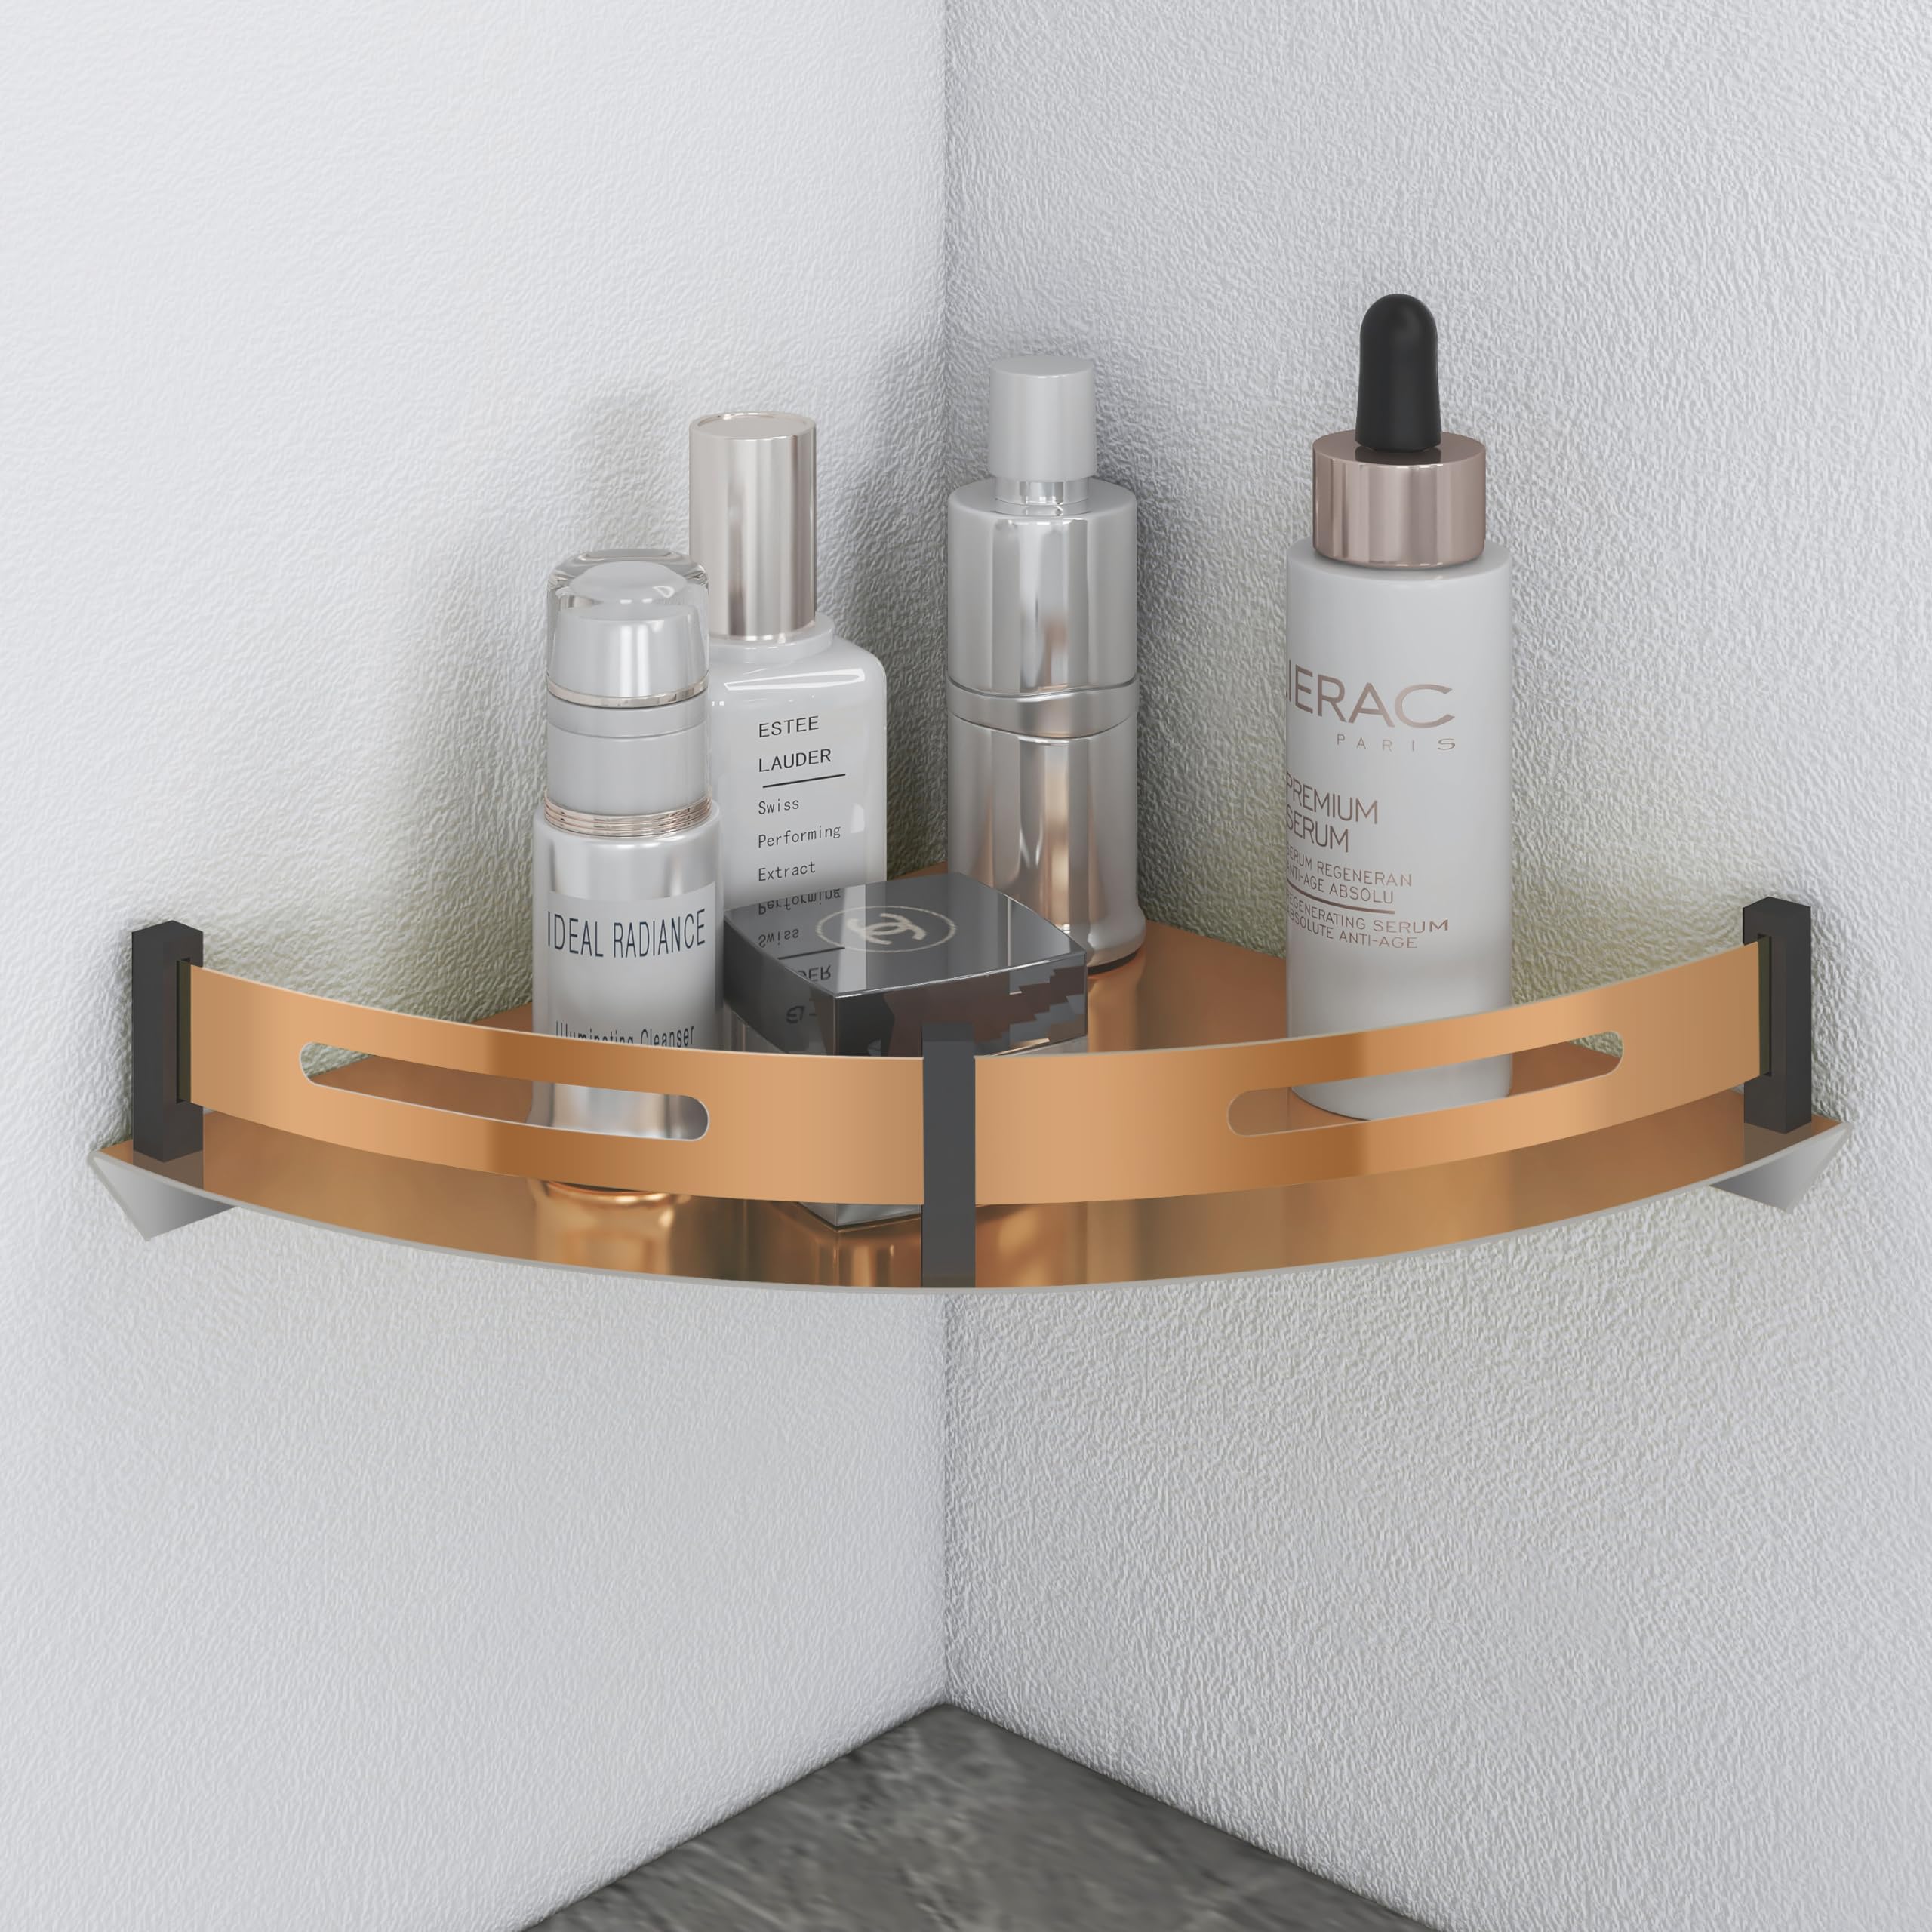 Plantex Advance Self-Adhesive Shelf Organizer for Bathroom and